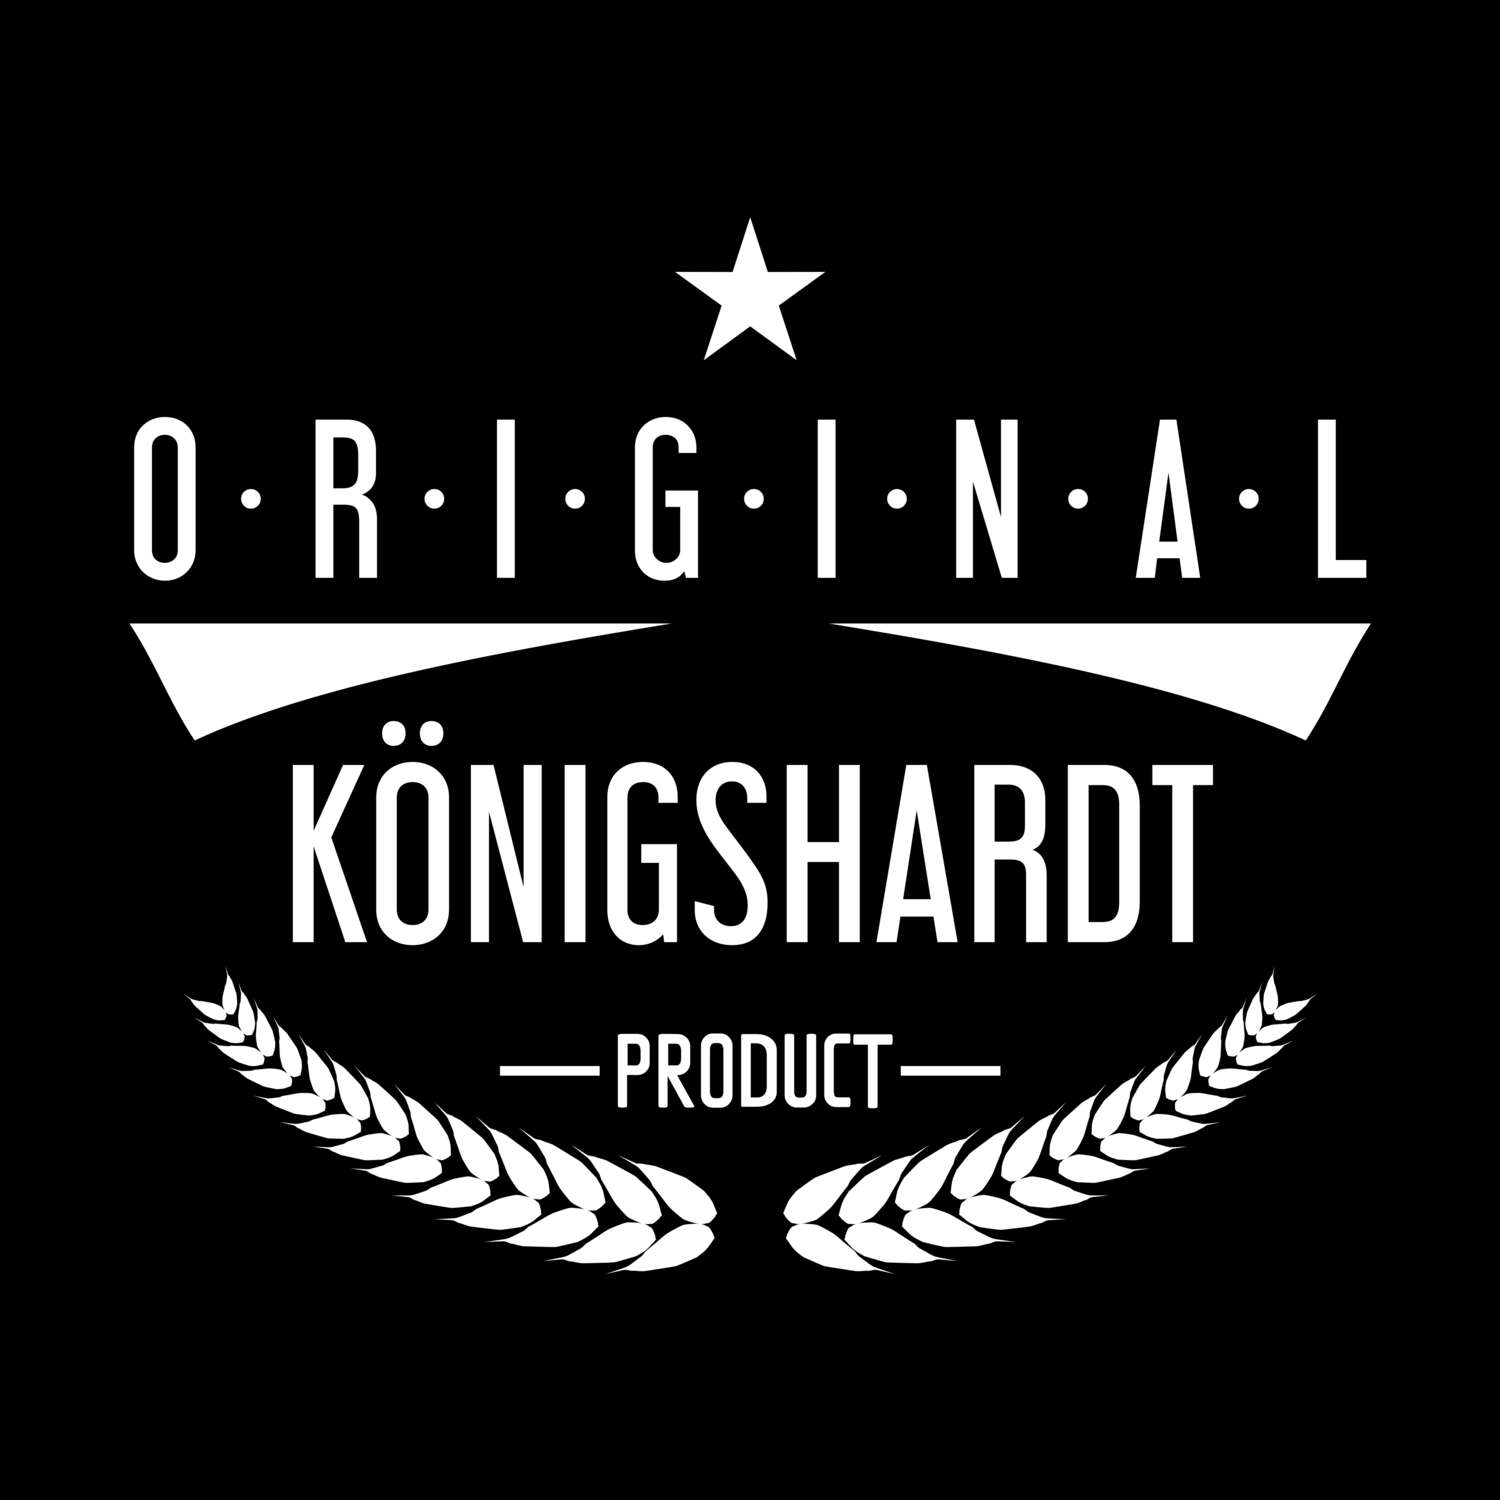 Königshardt T-Shirt »Original Product«